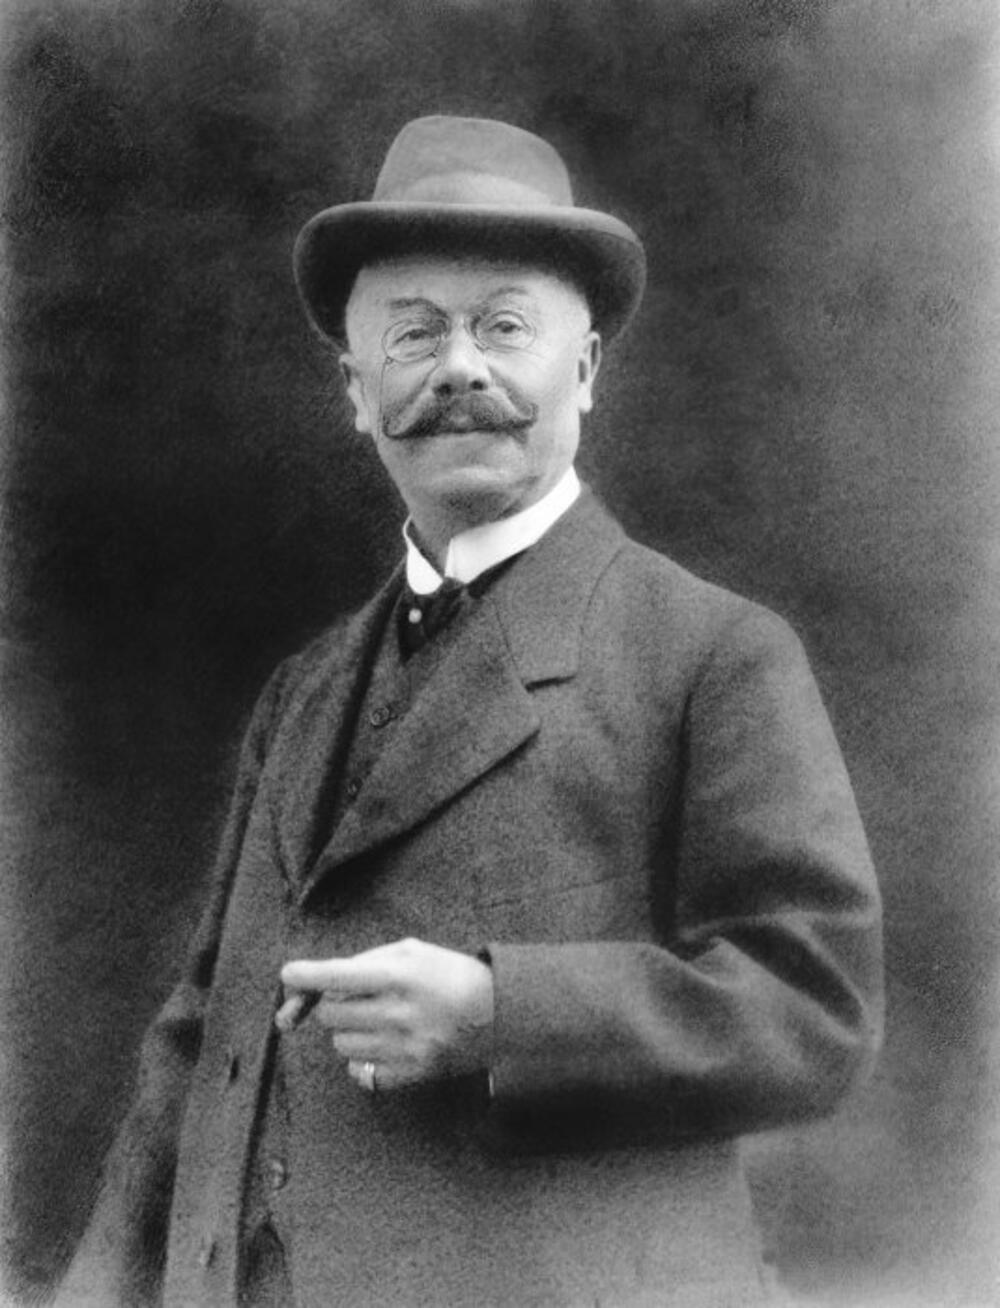 Emil Jelinek